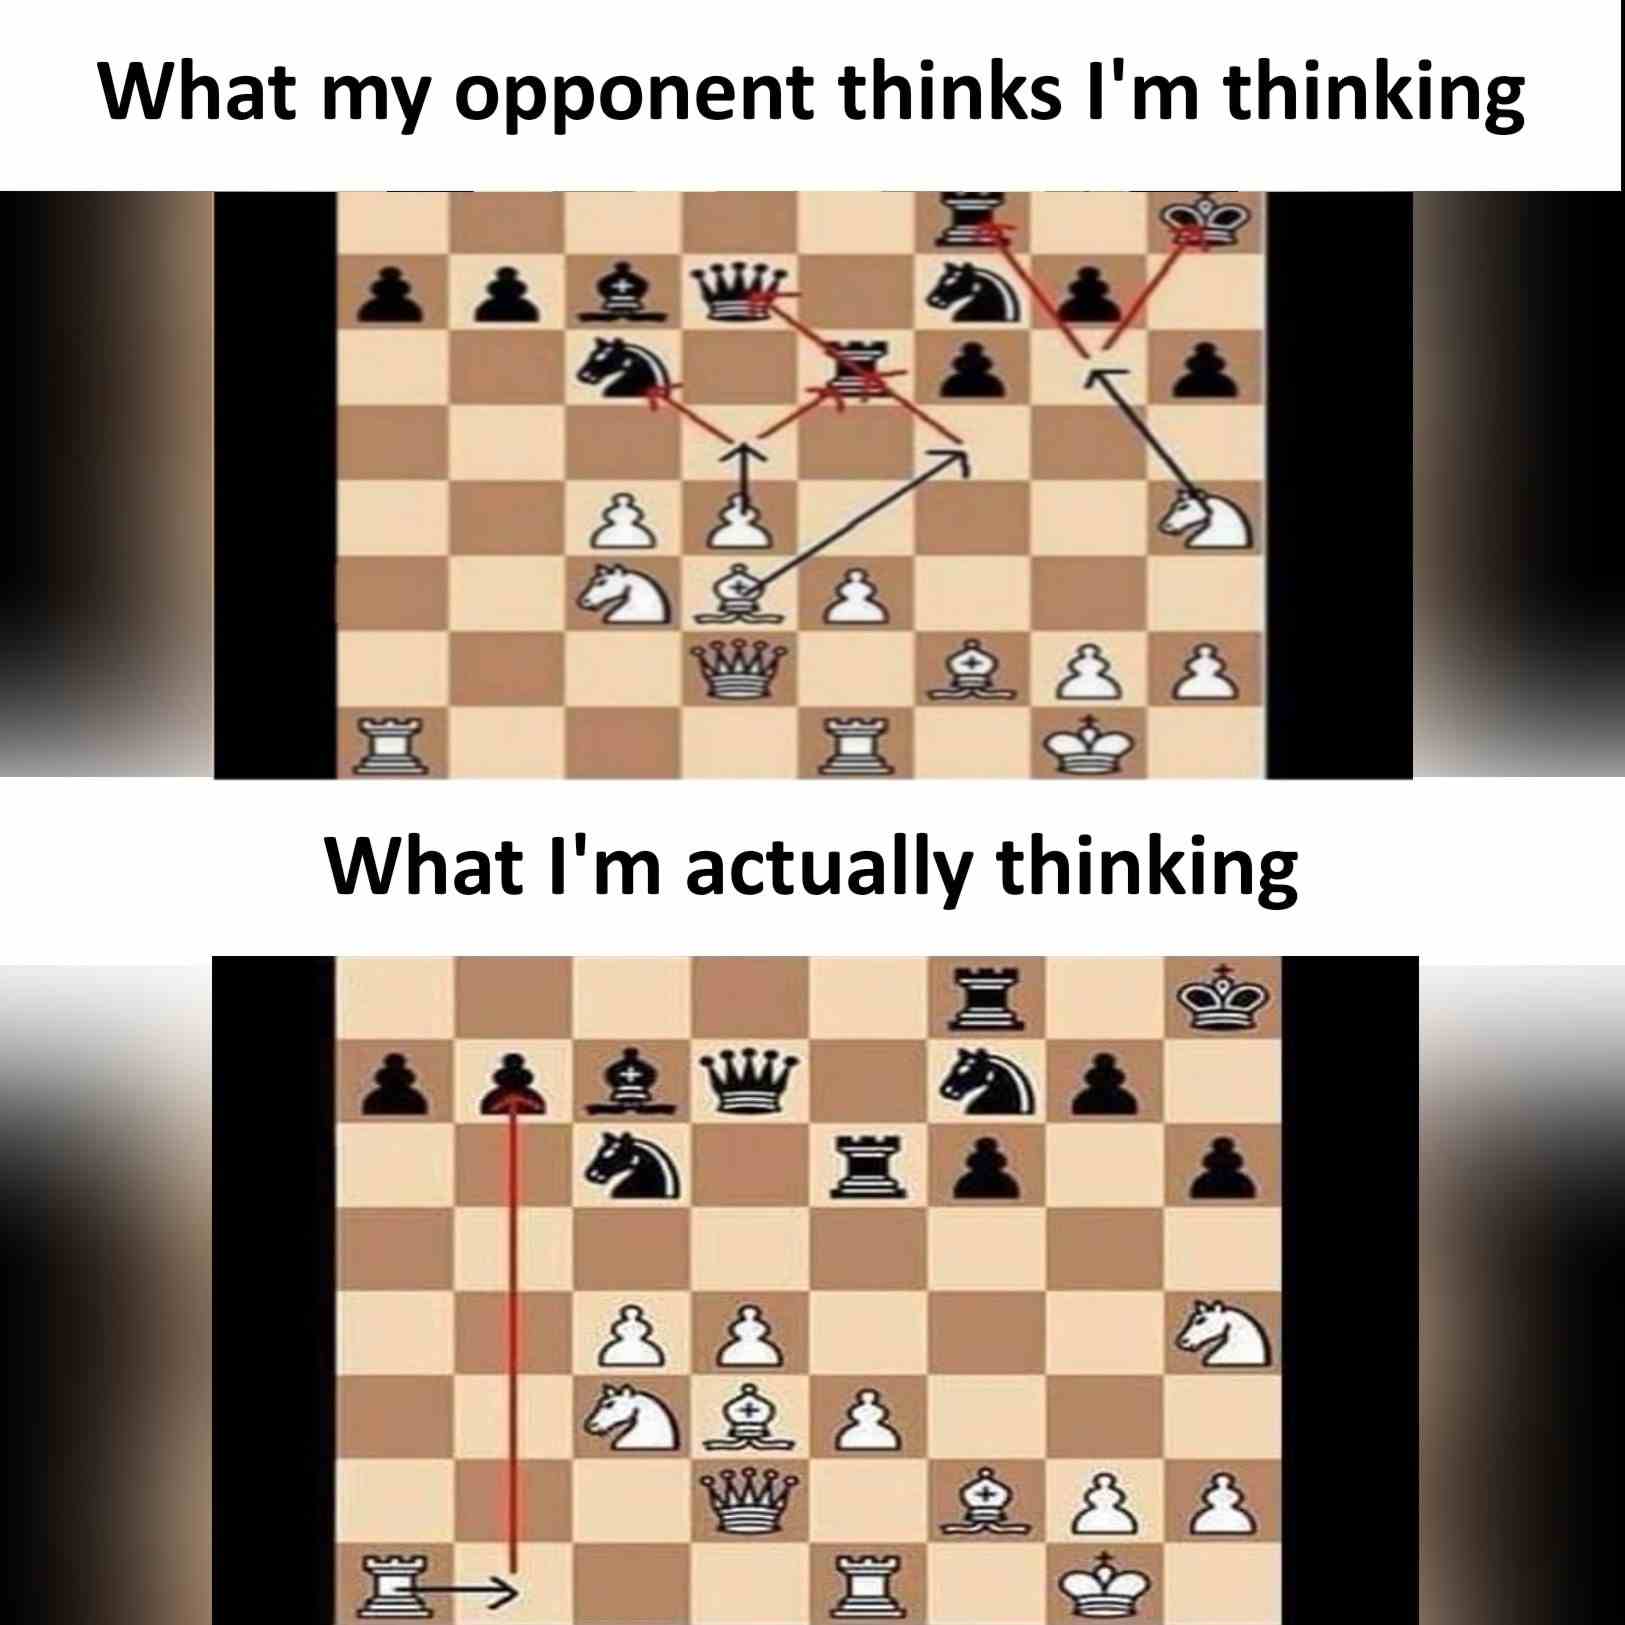 What my opponent thinks I'm thinking